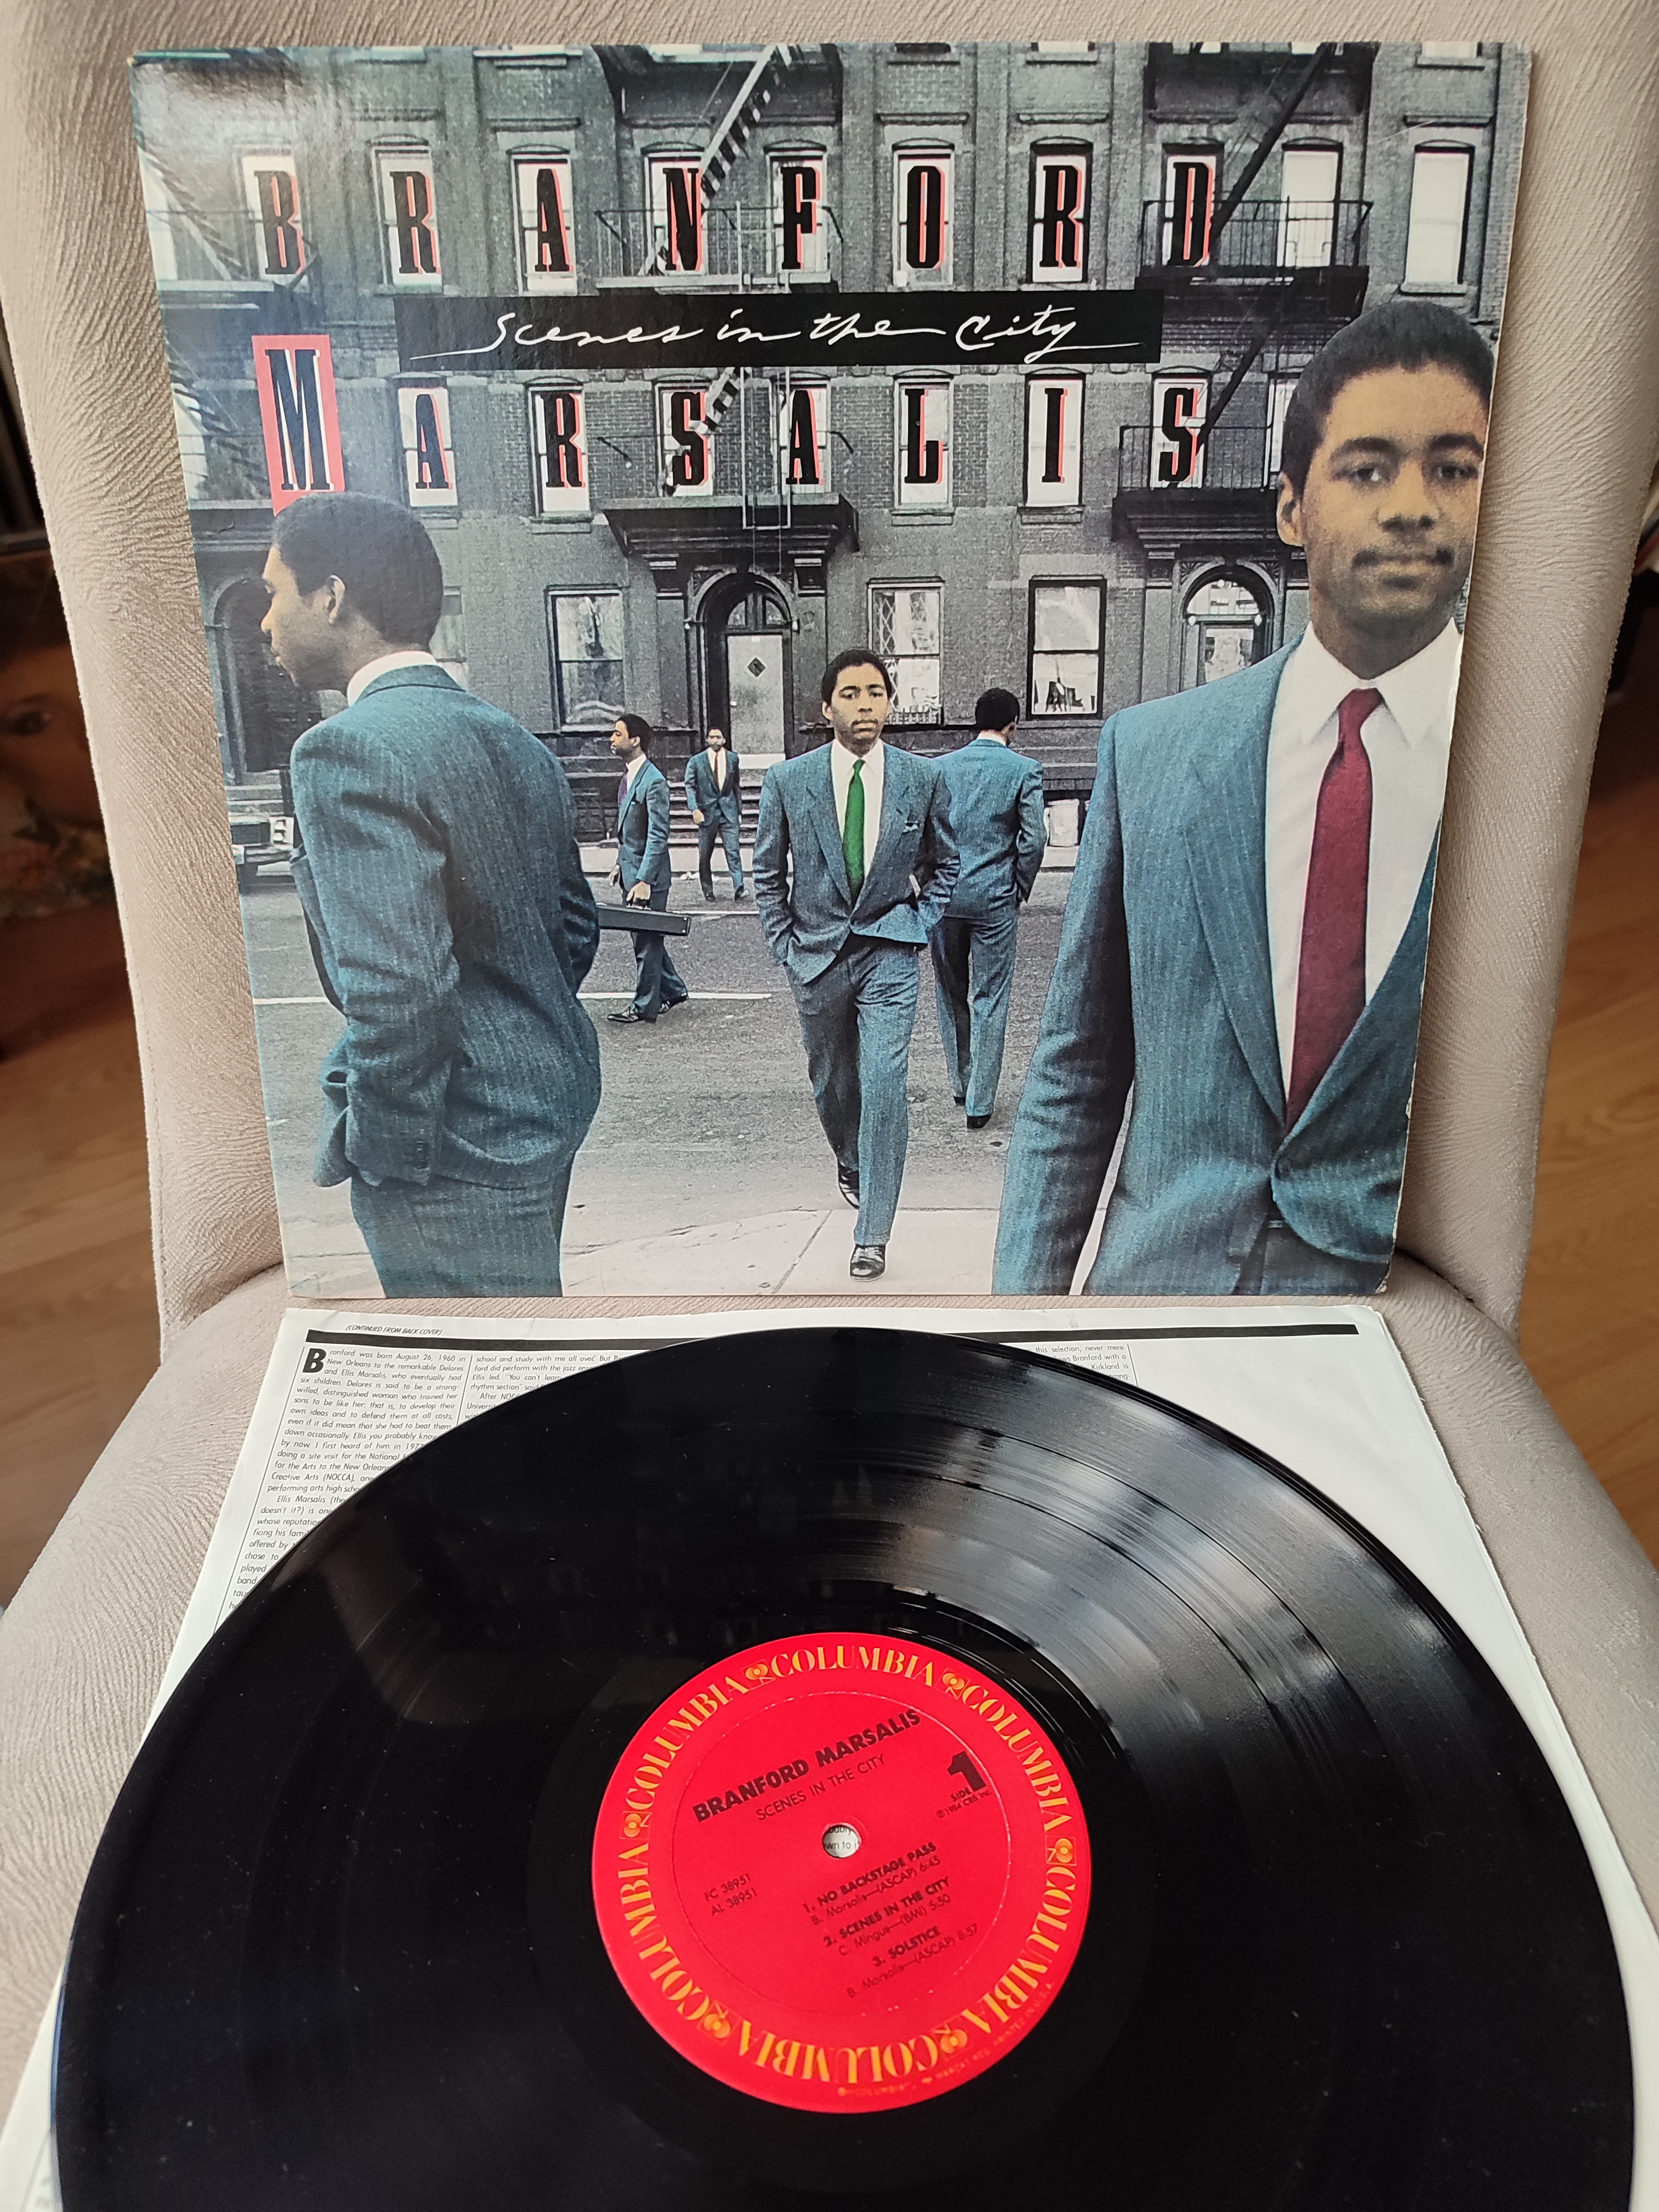 Branford Marsalis ‎- Scenes In The City - 1984 USA Basım Albüm LP Plak - Jazz - 2. EL